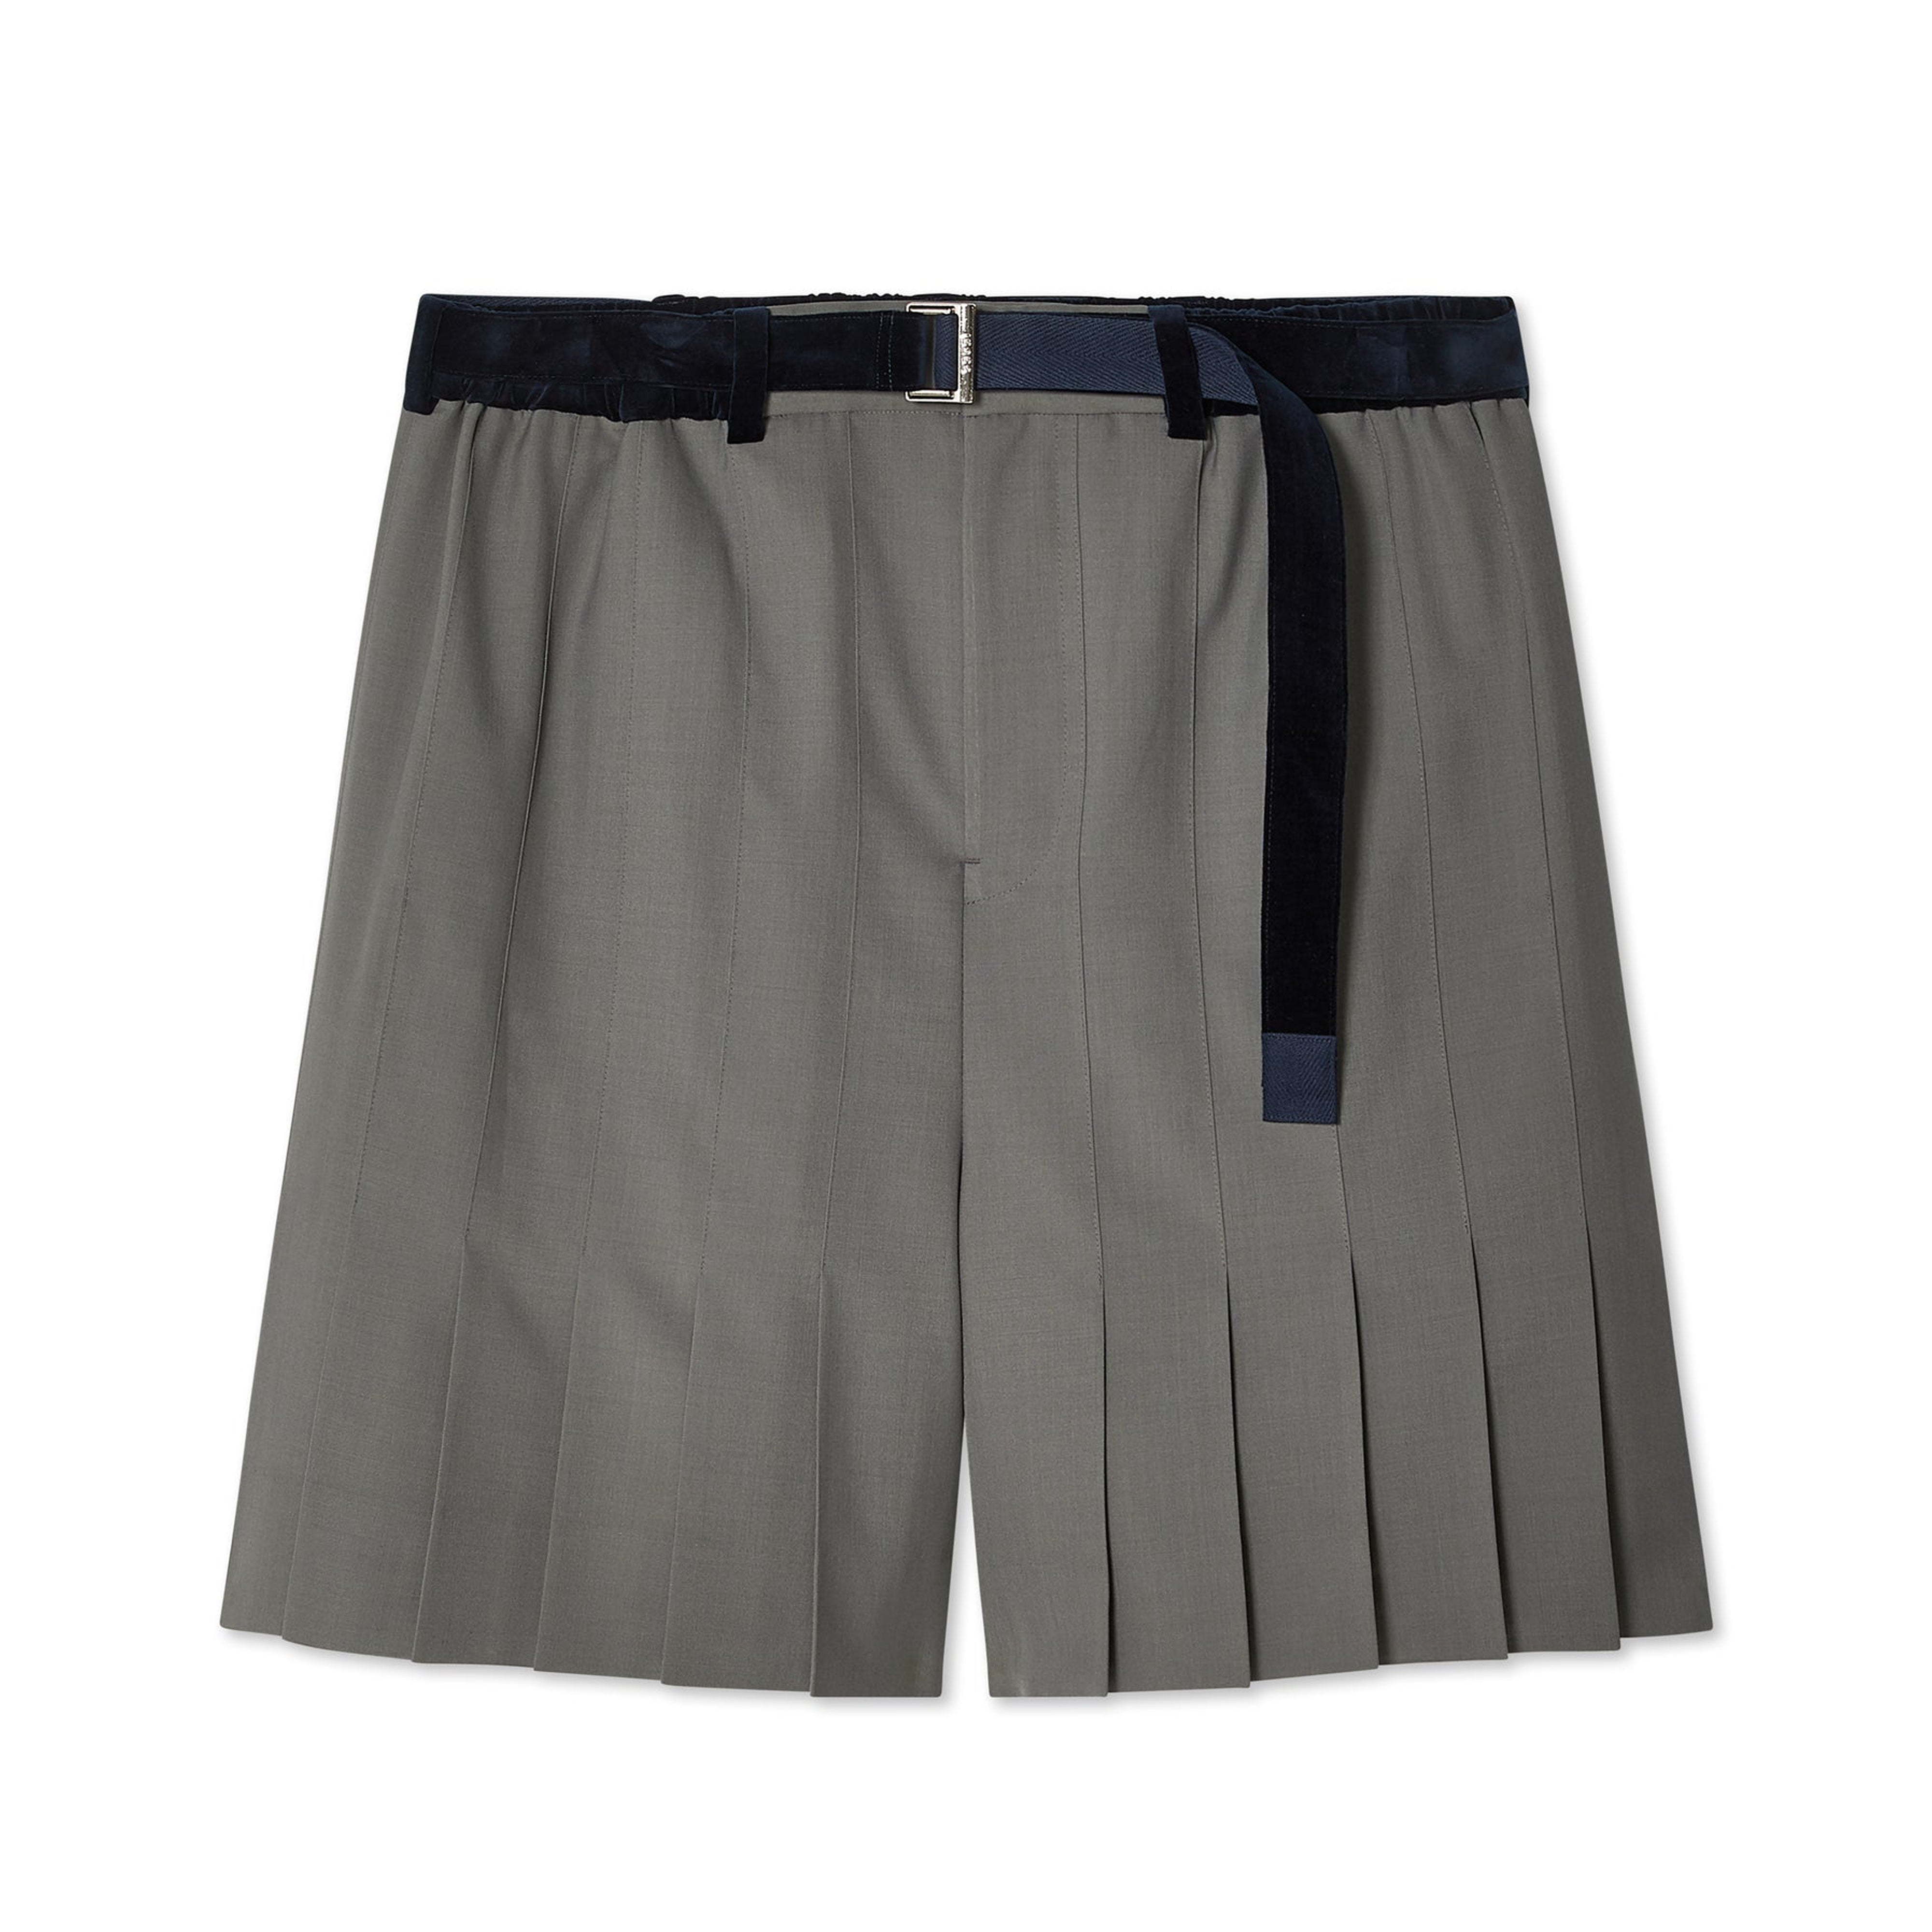 sacai - Men’s Suiting Shorts - (Taupe)